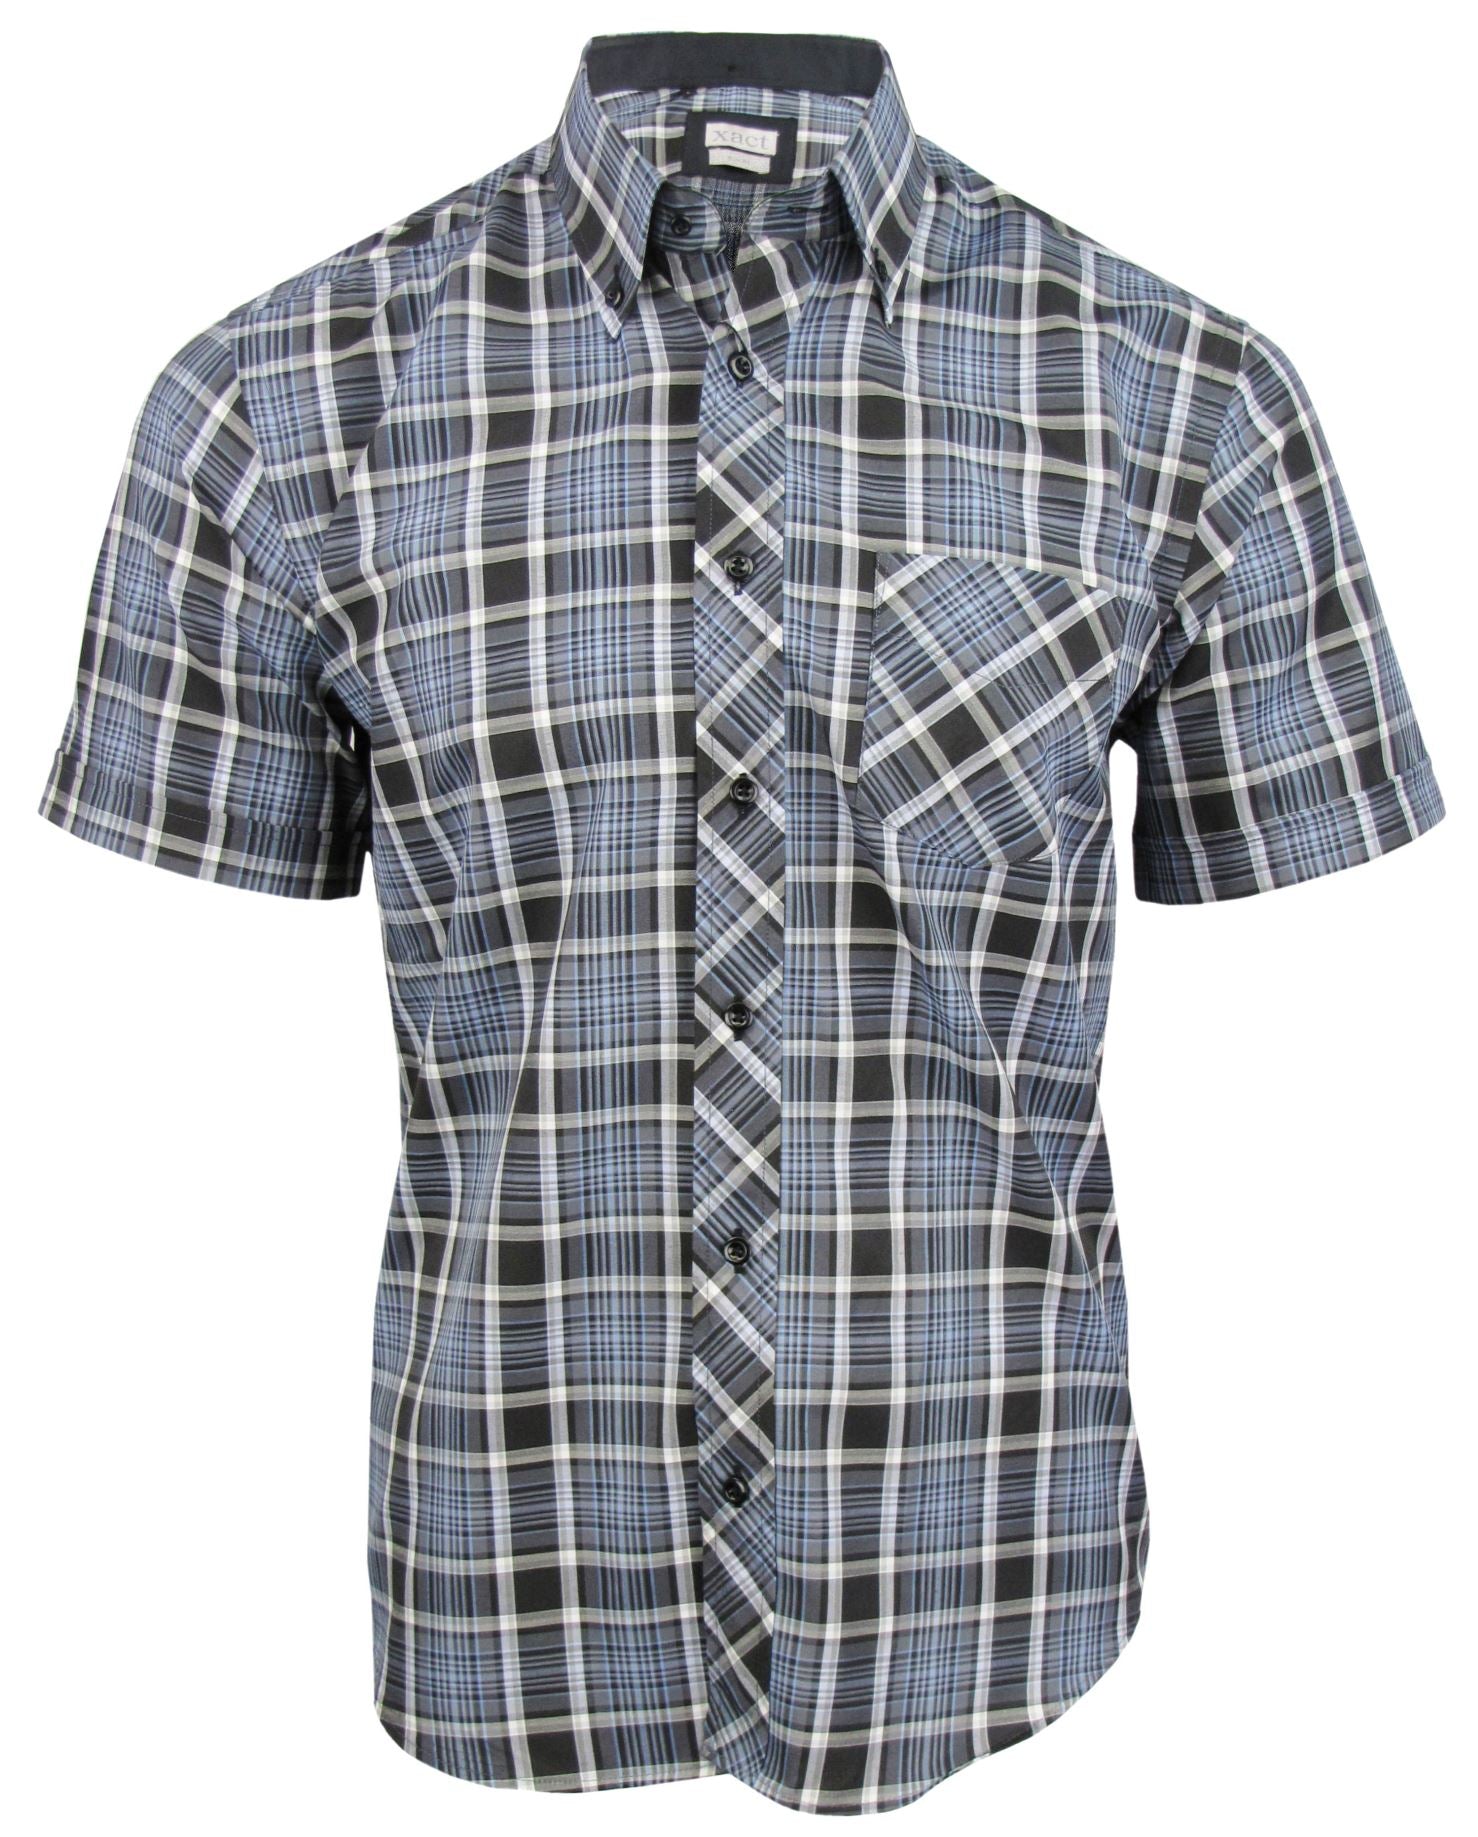 Mens Short Sleeve Check Shirt Button Down Collar Slim Fit By Xact-Main Image